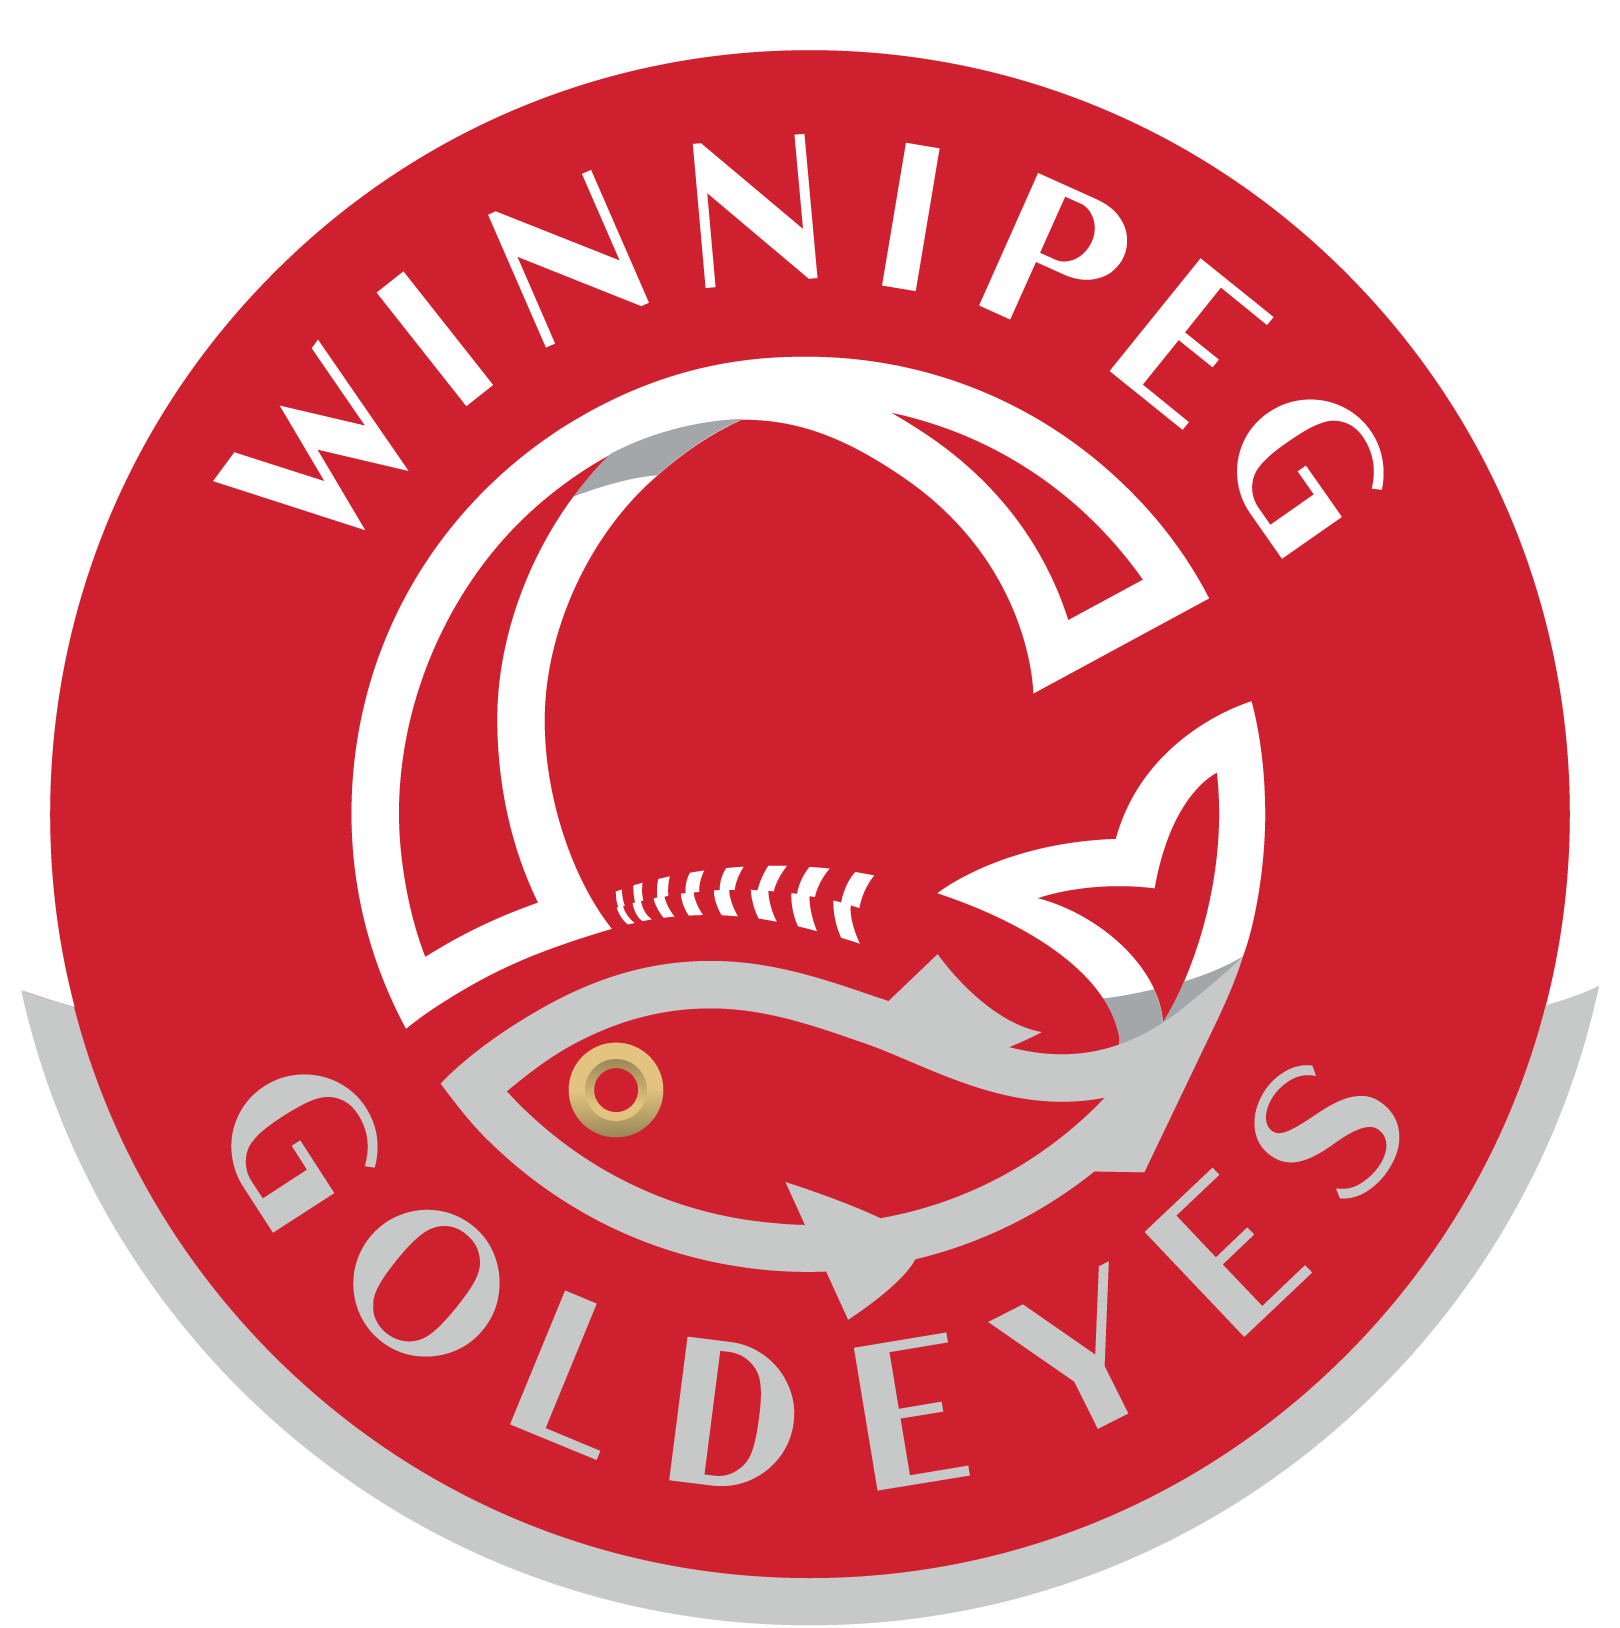 Winnipeg Gold Eyes